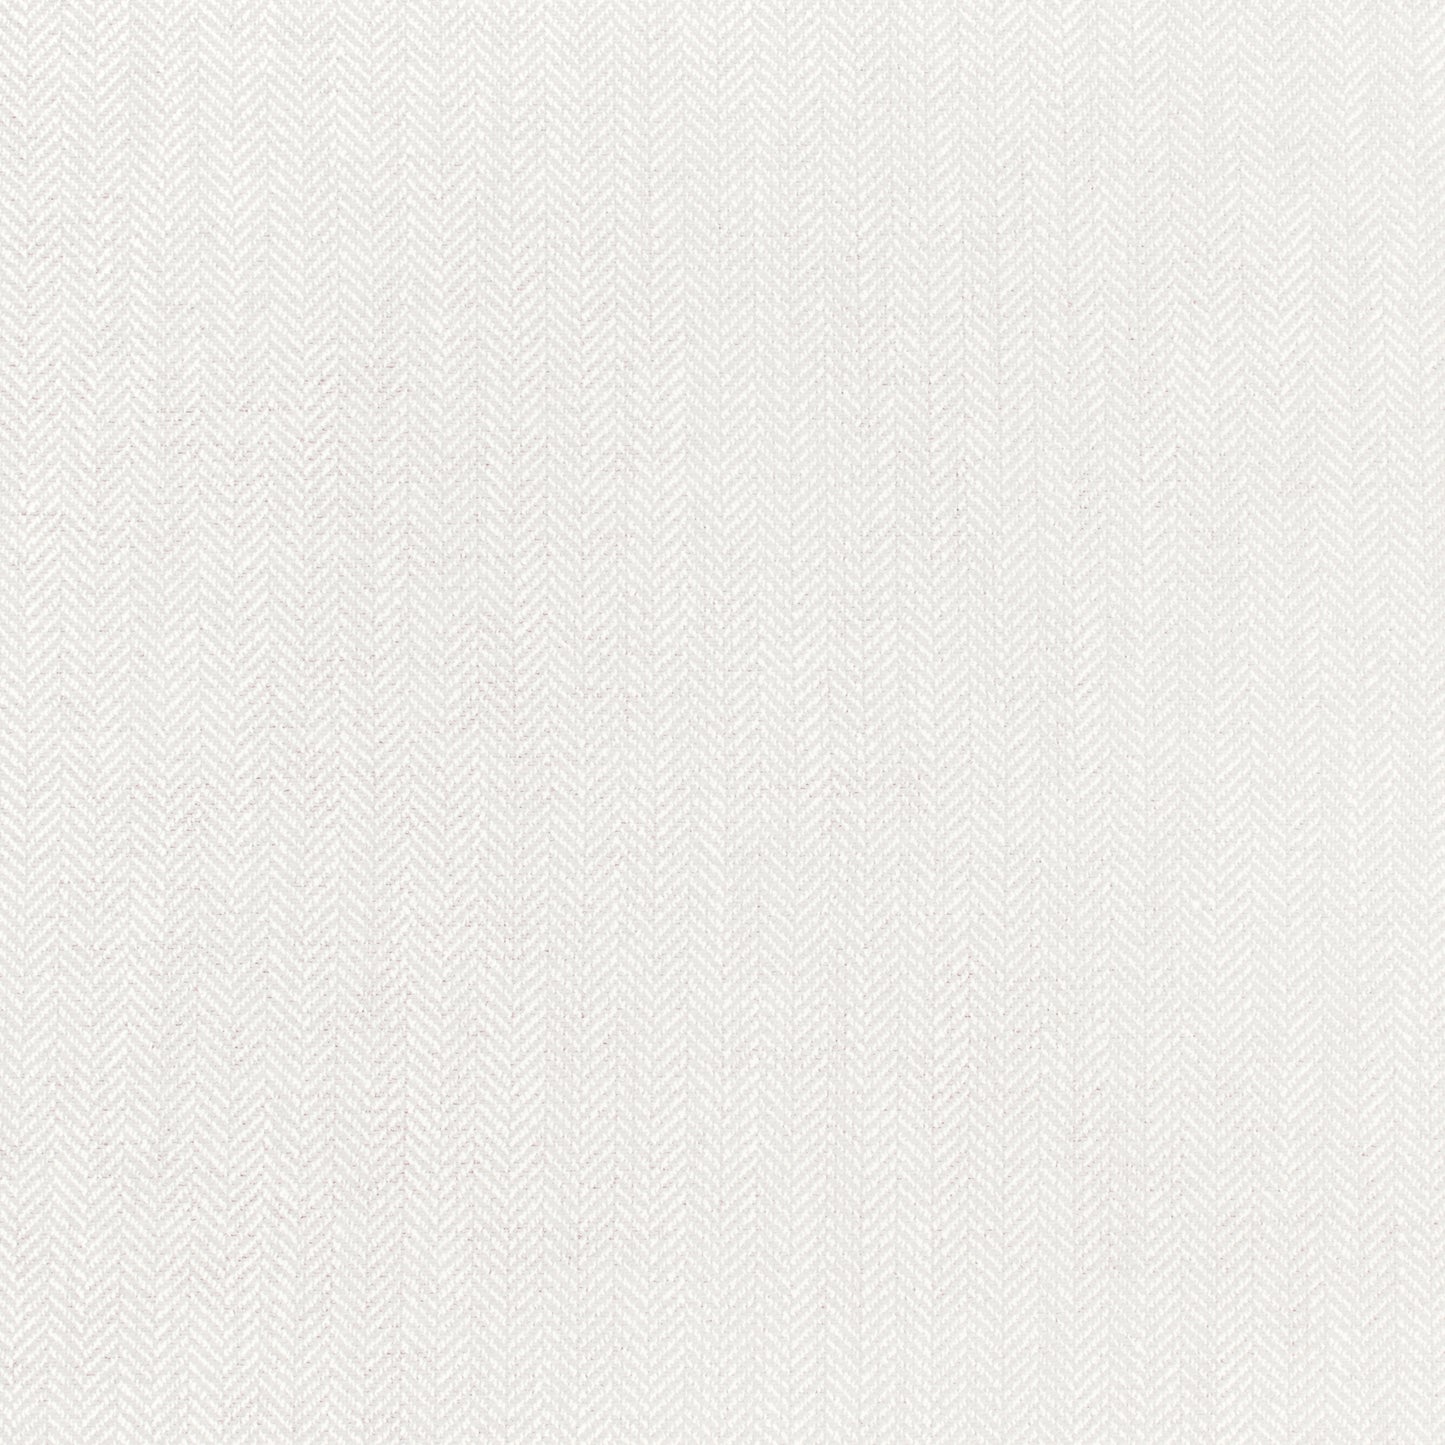 Purchase Thibaut Fabric Product W724128 pattern name Montebello Herr/Cfa Req'D color Whisper White